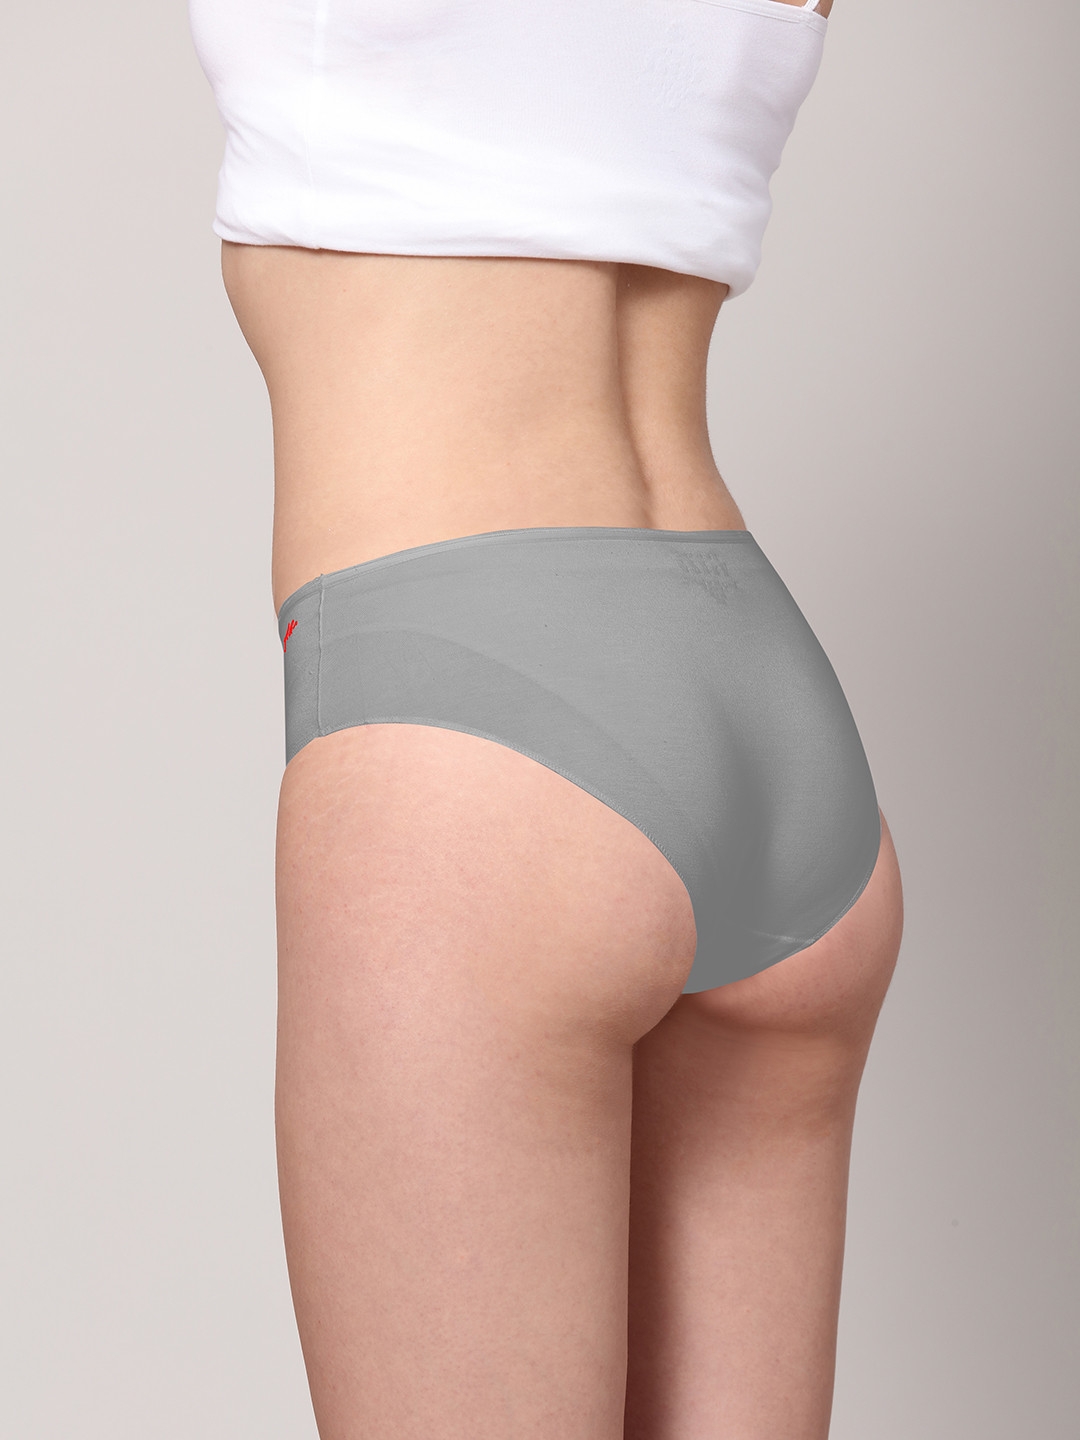 AshleyandAlvis | AshleyandAlvis Women's Panties Micro Modal, Anti Bacterial, Skinny Soft, Premium Hipster  -No Itching, Sweat Proof, Double In-seam Gusset 3